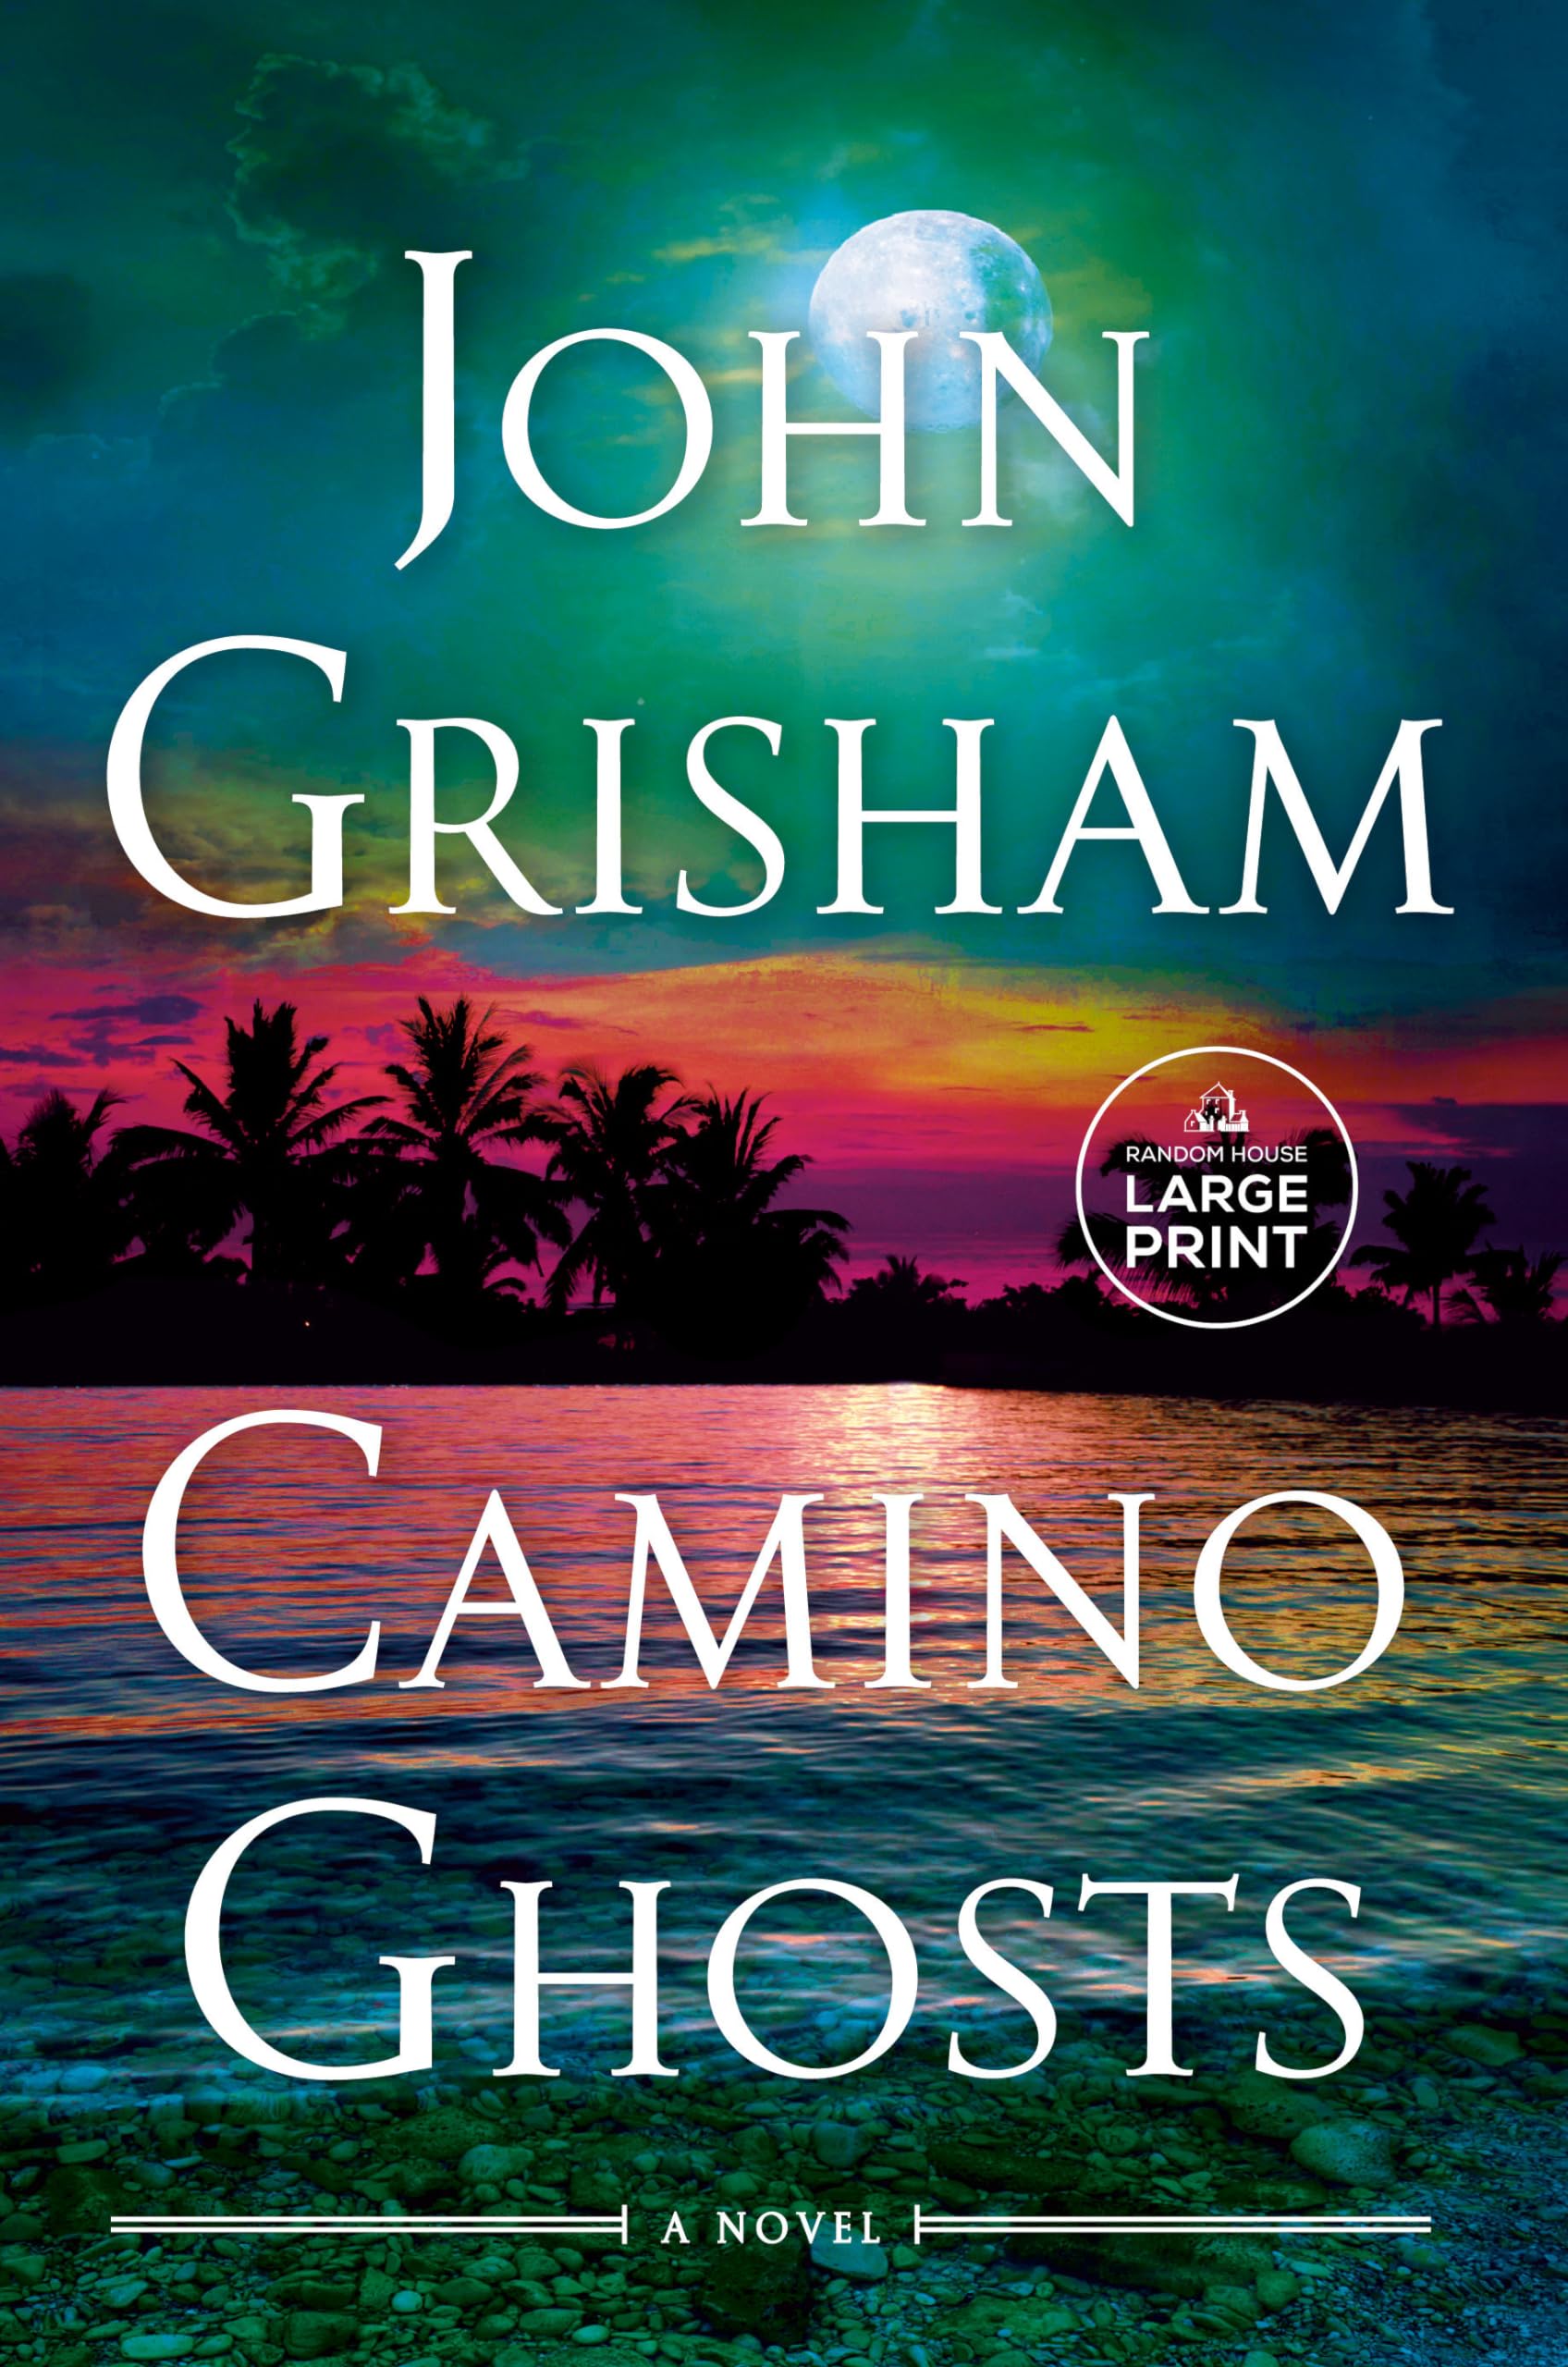 Camino Ghosts by Grisham, John